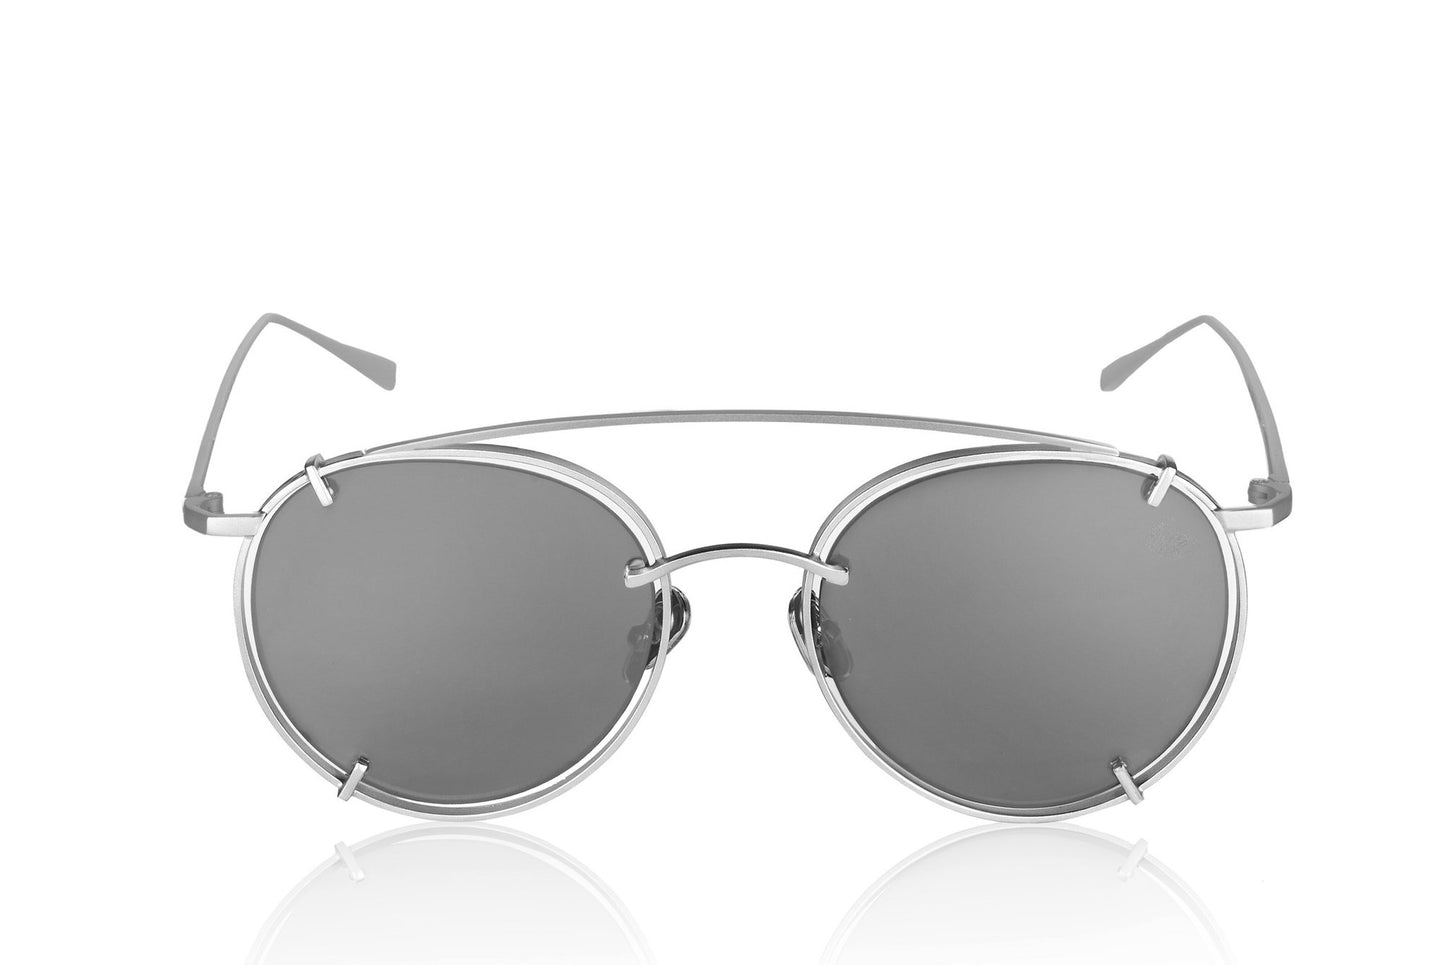 Stylish S1955 Sunglasses - Timeless Elegance